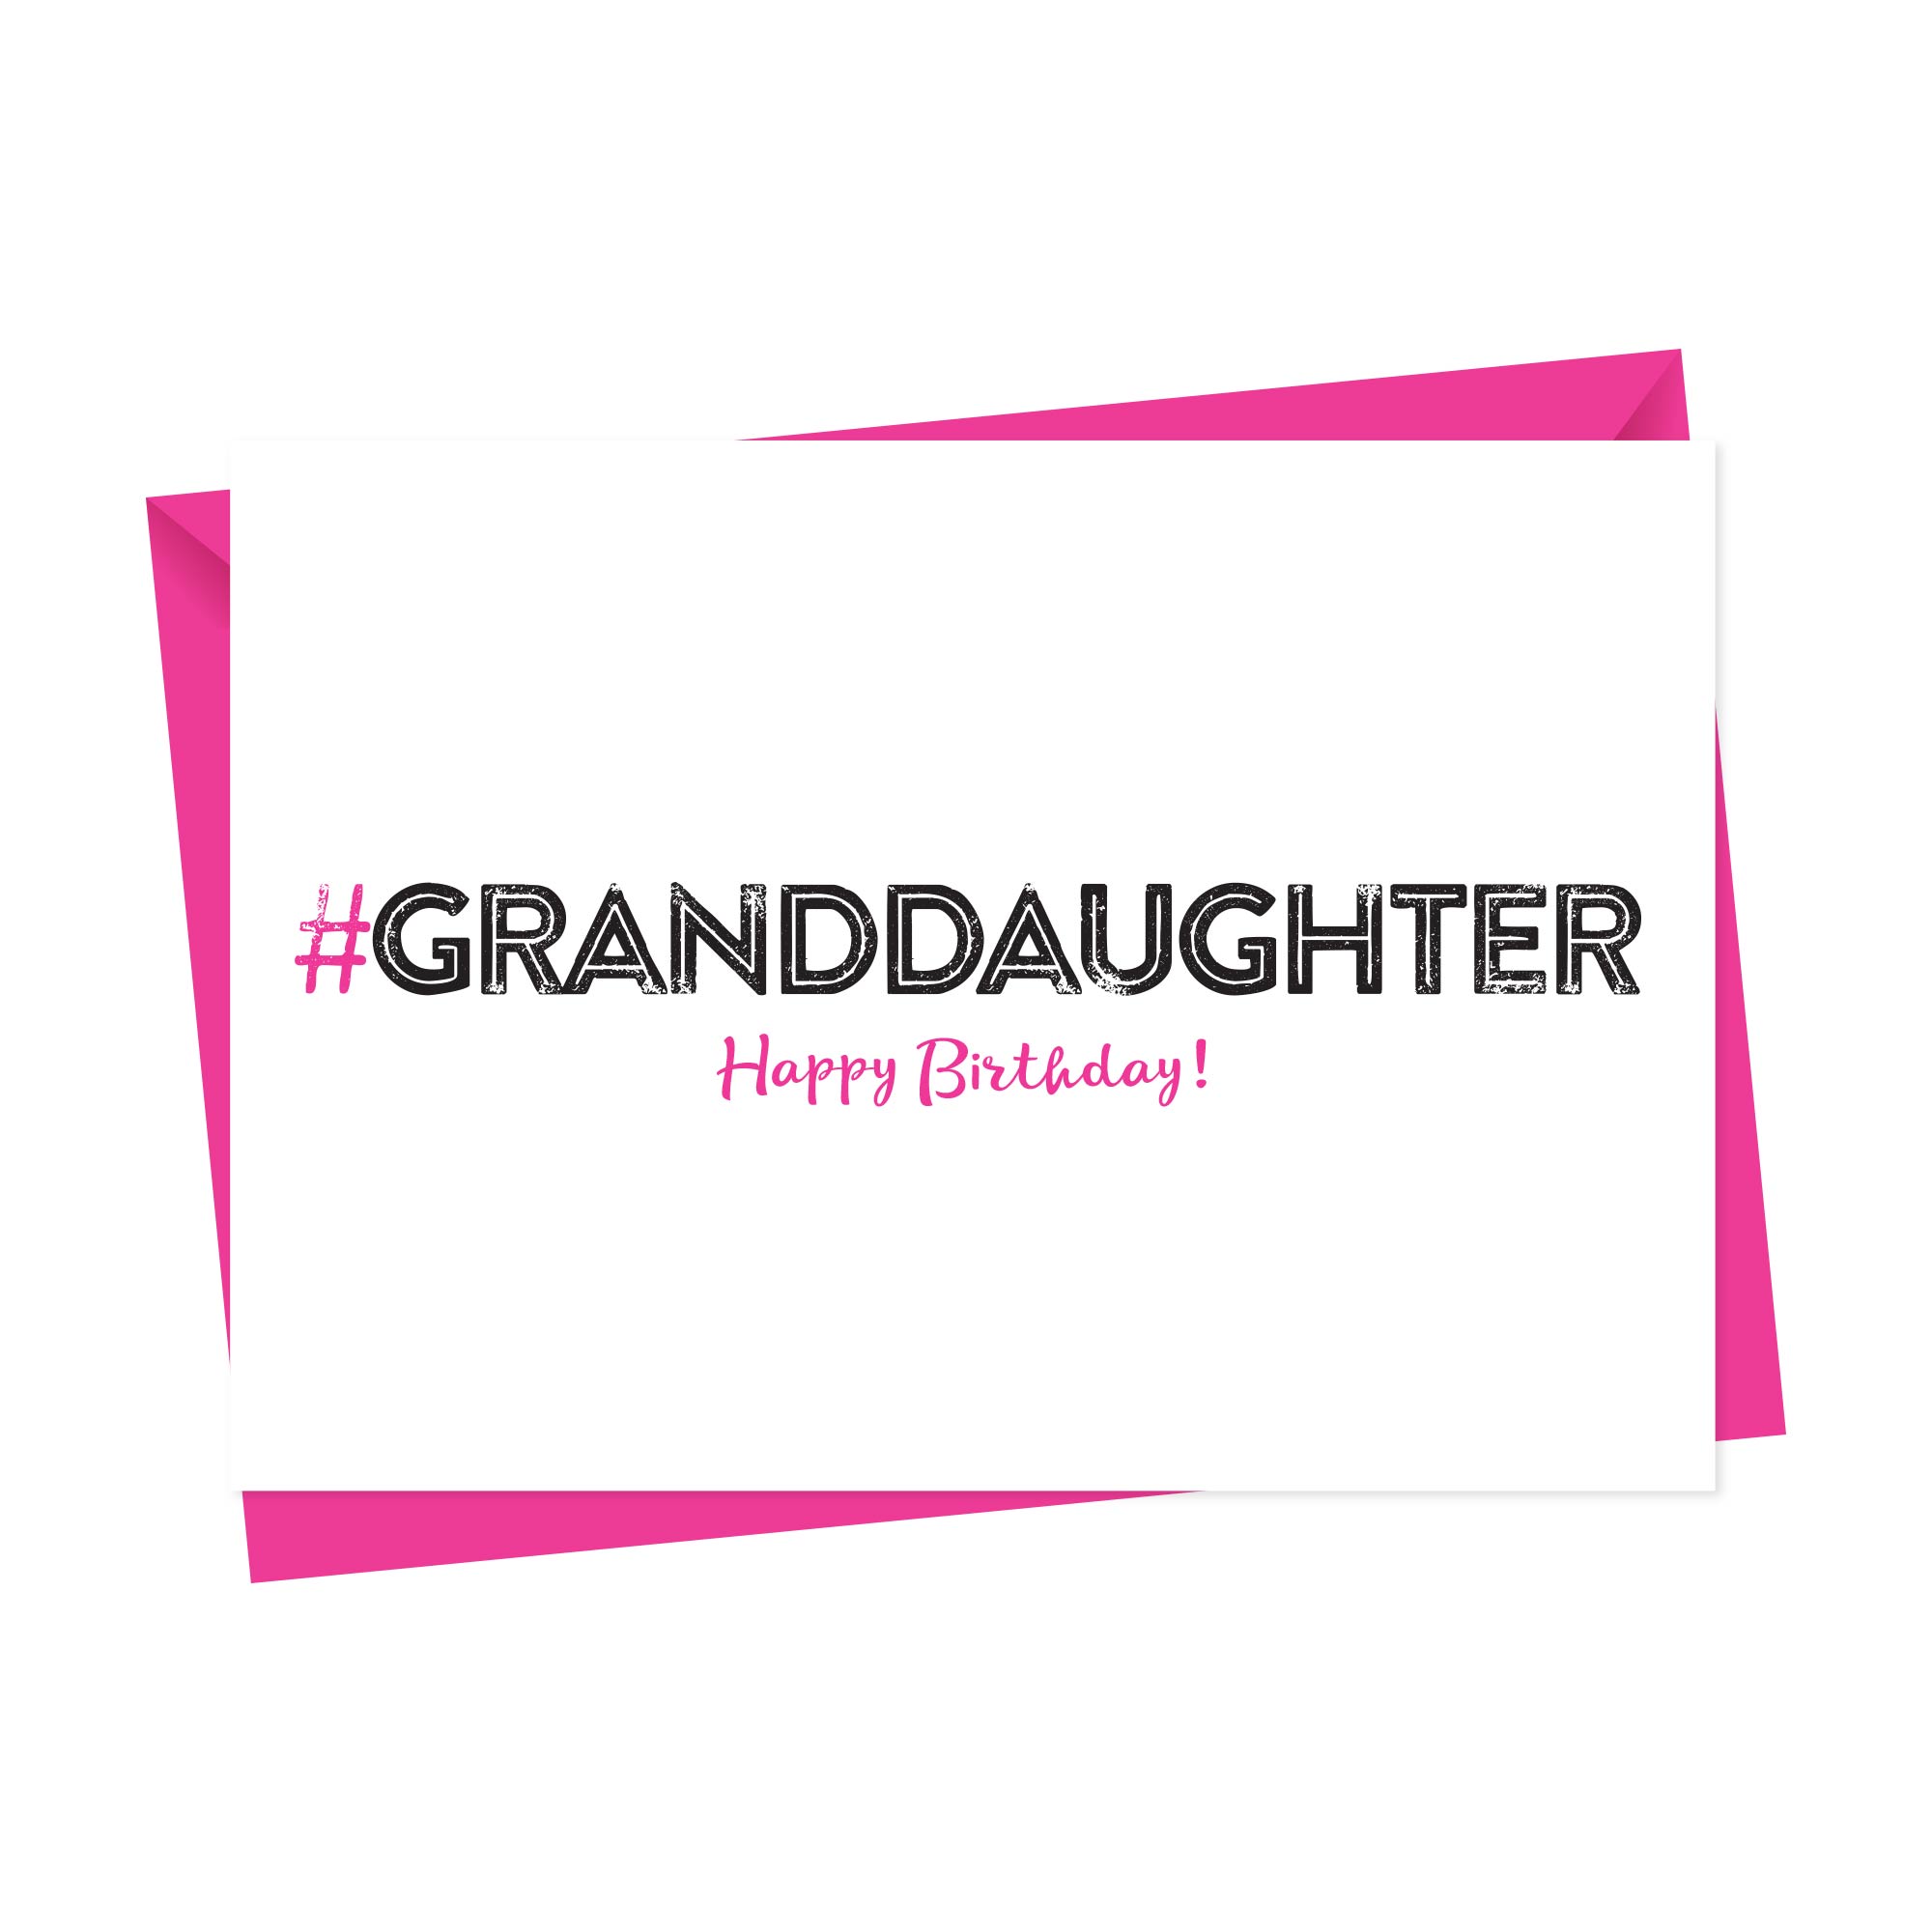 Hashtag Granddaughter Birthday Card